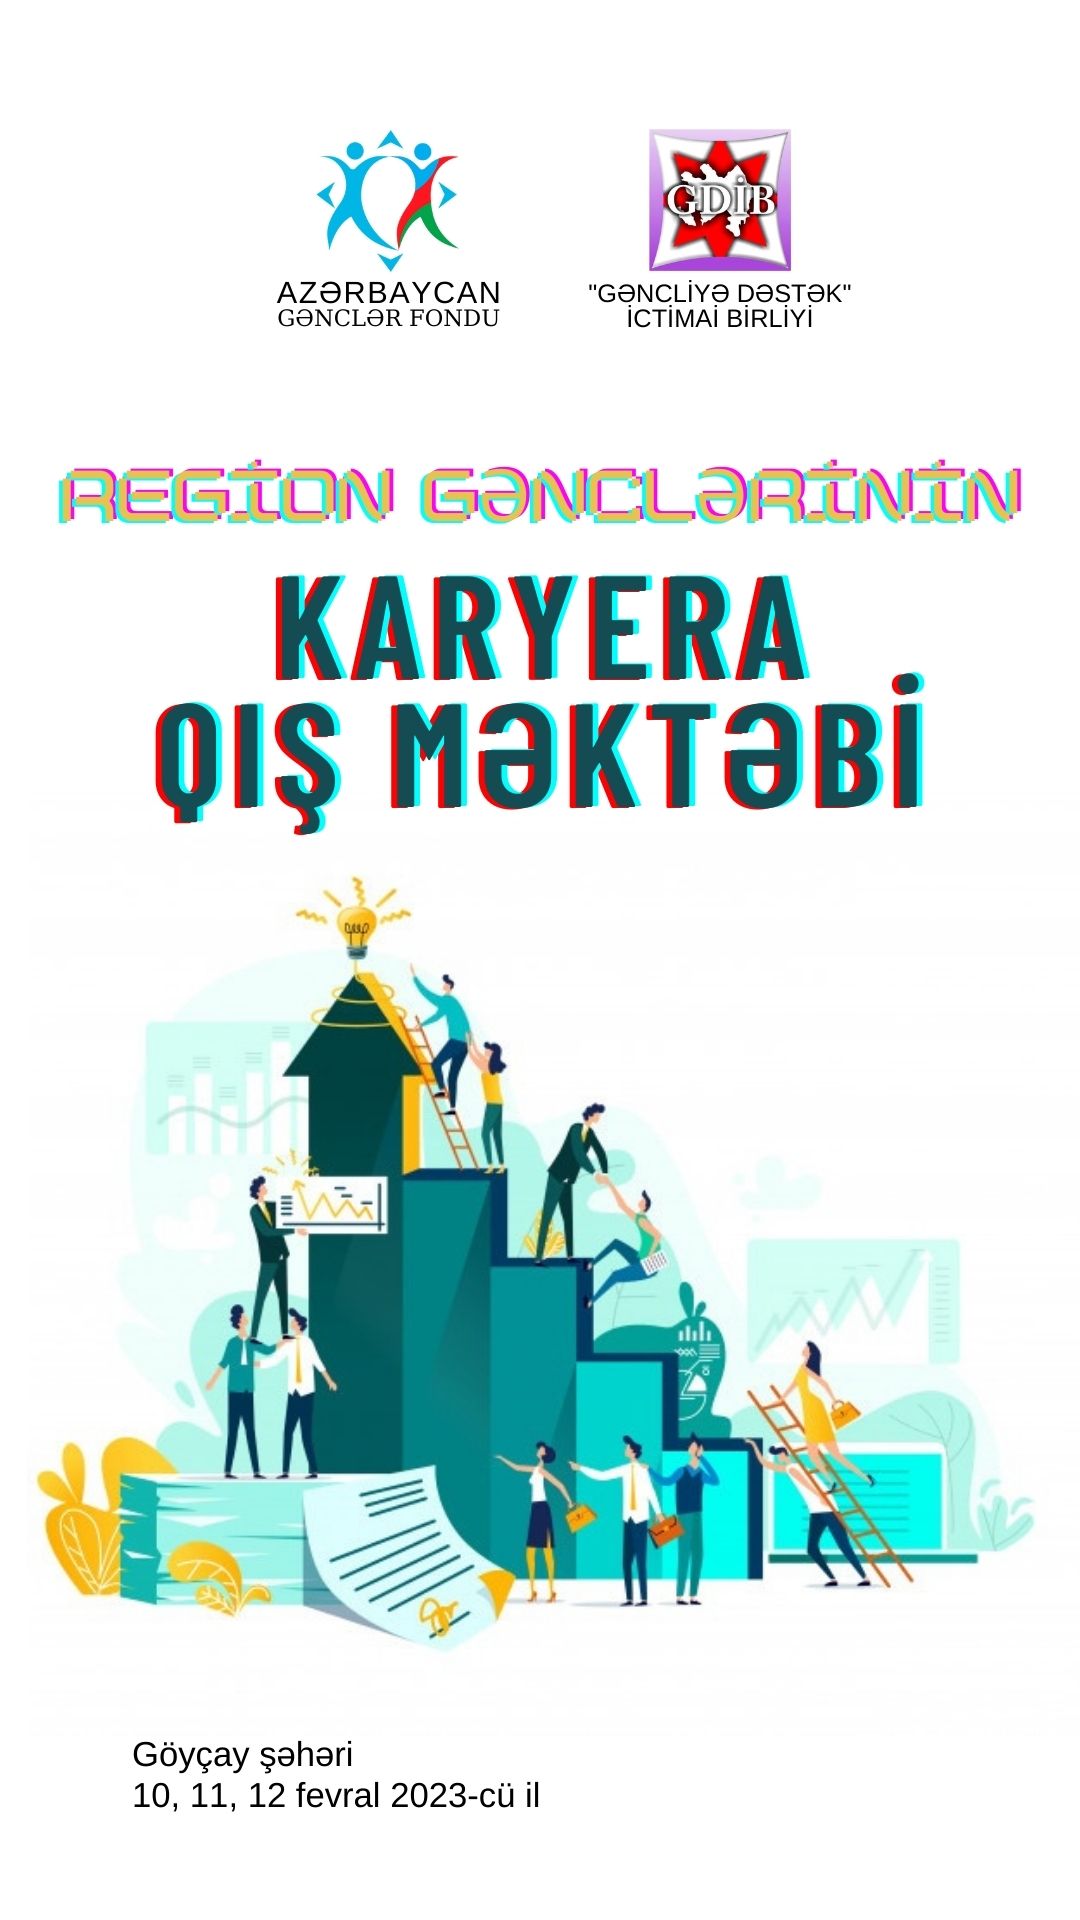 image-qis-mektebi-poster